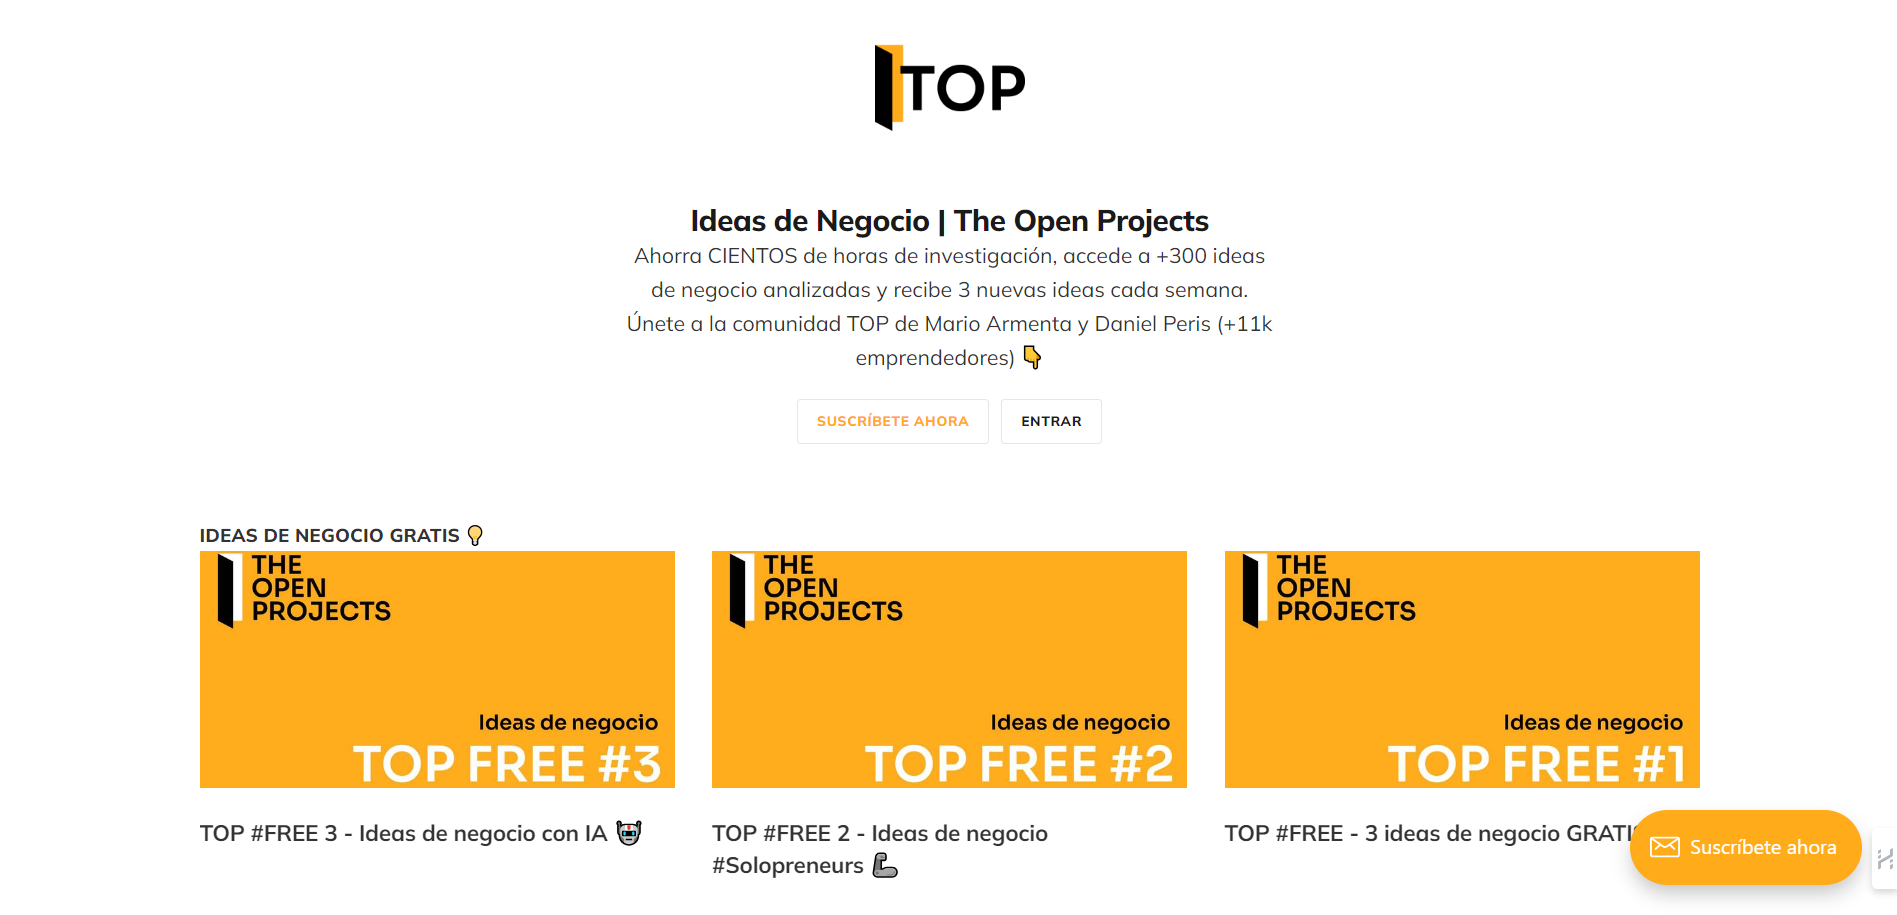 Imagen de la portada de la web de la newsletter The open projects